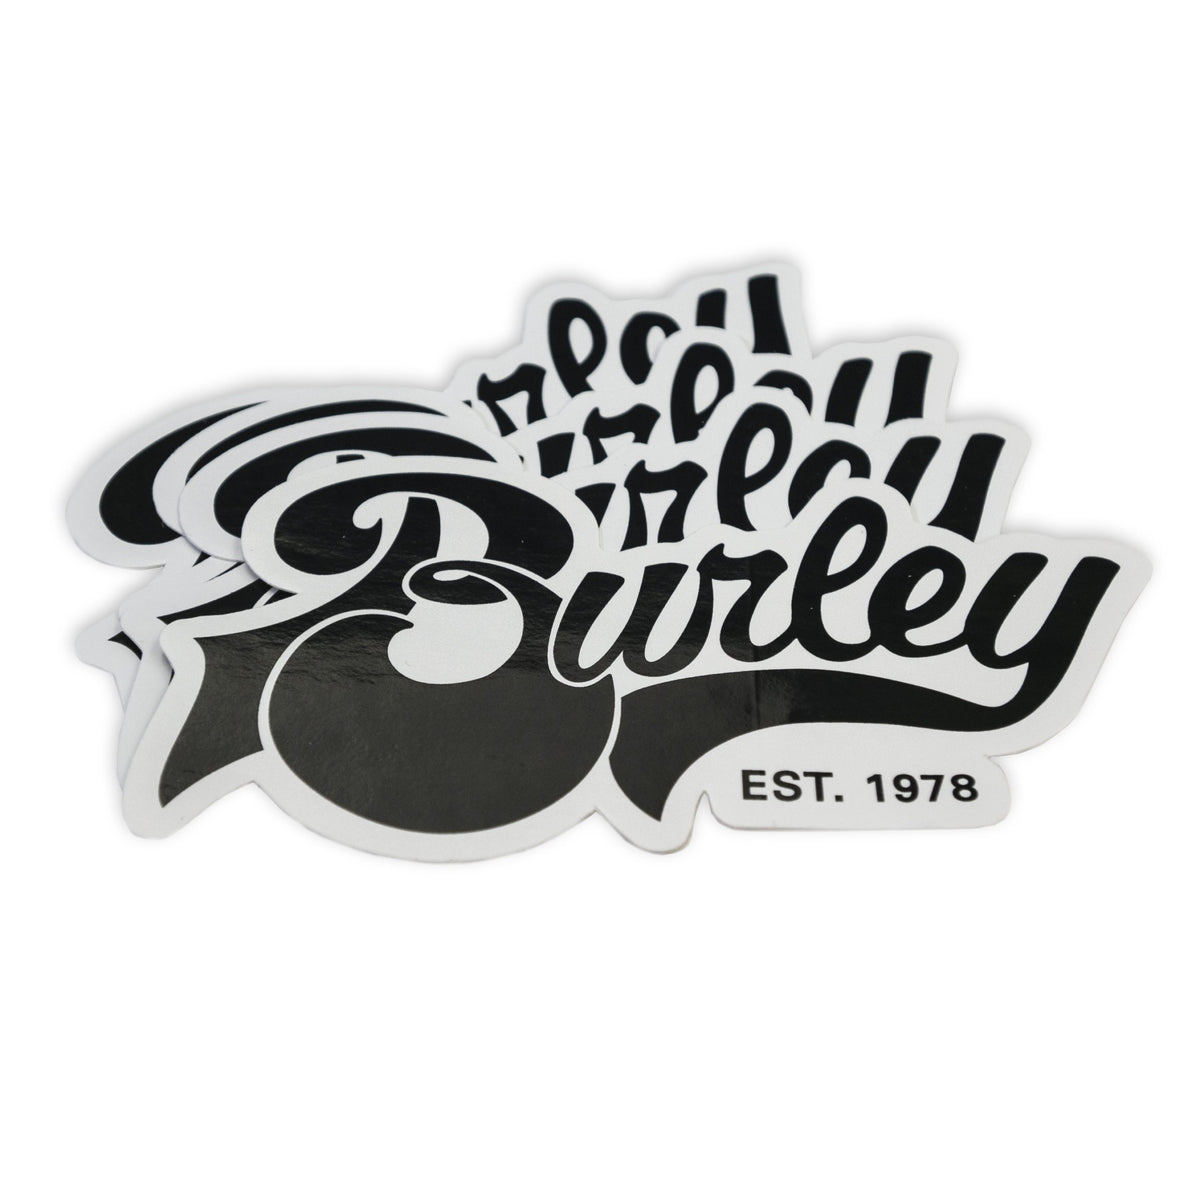 Burley Stickers